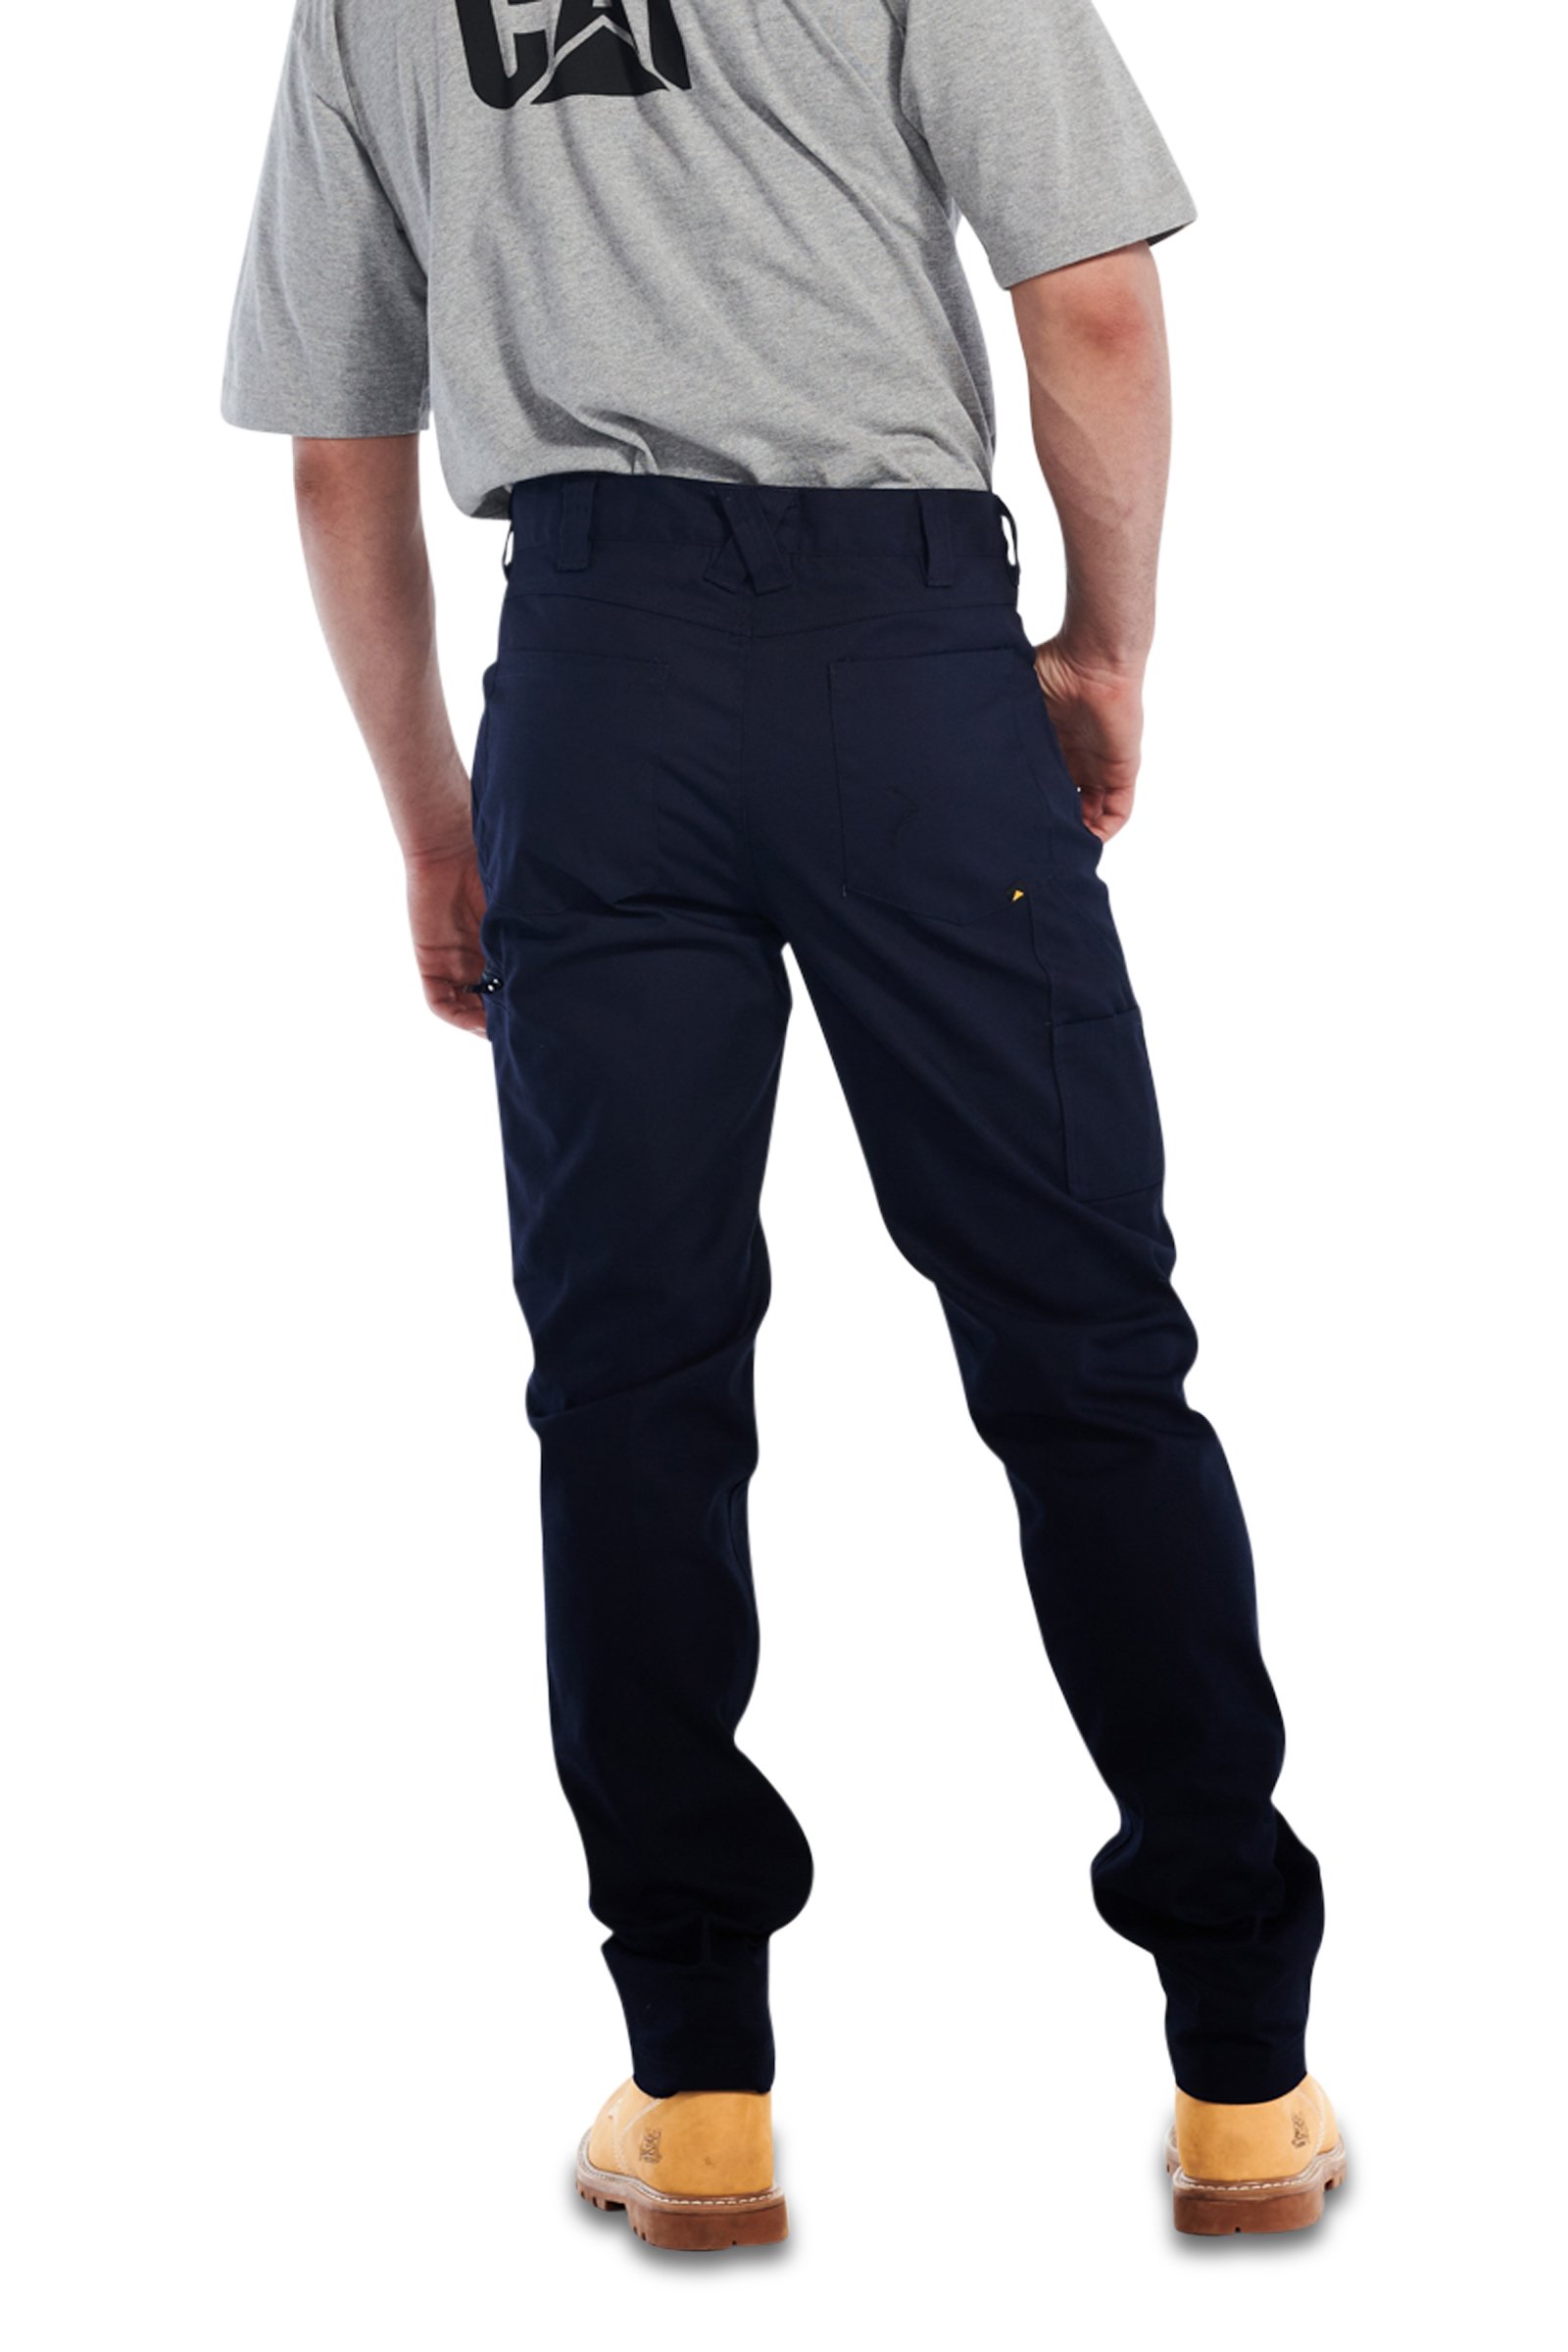 Stretch canvas multi-pocket pants - Go Nats